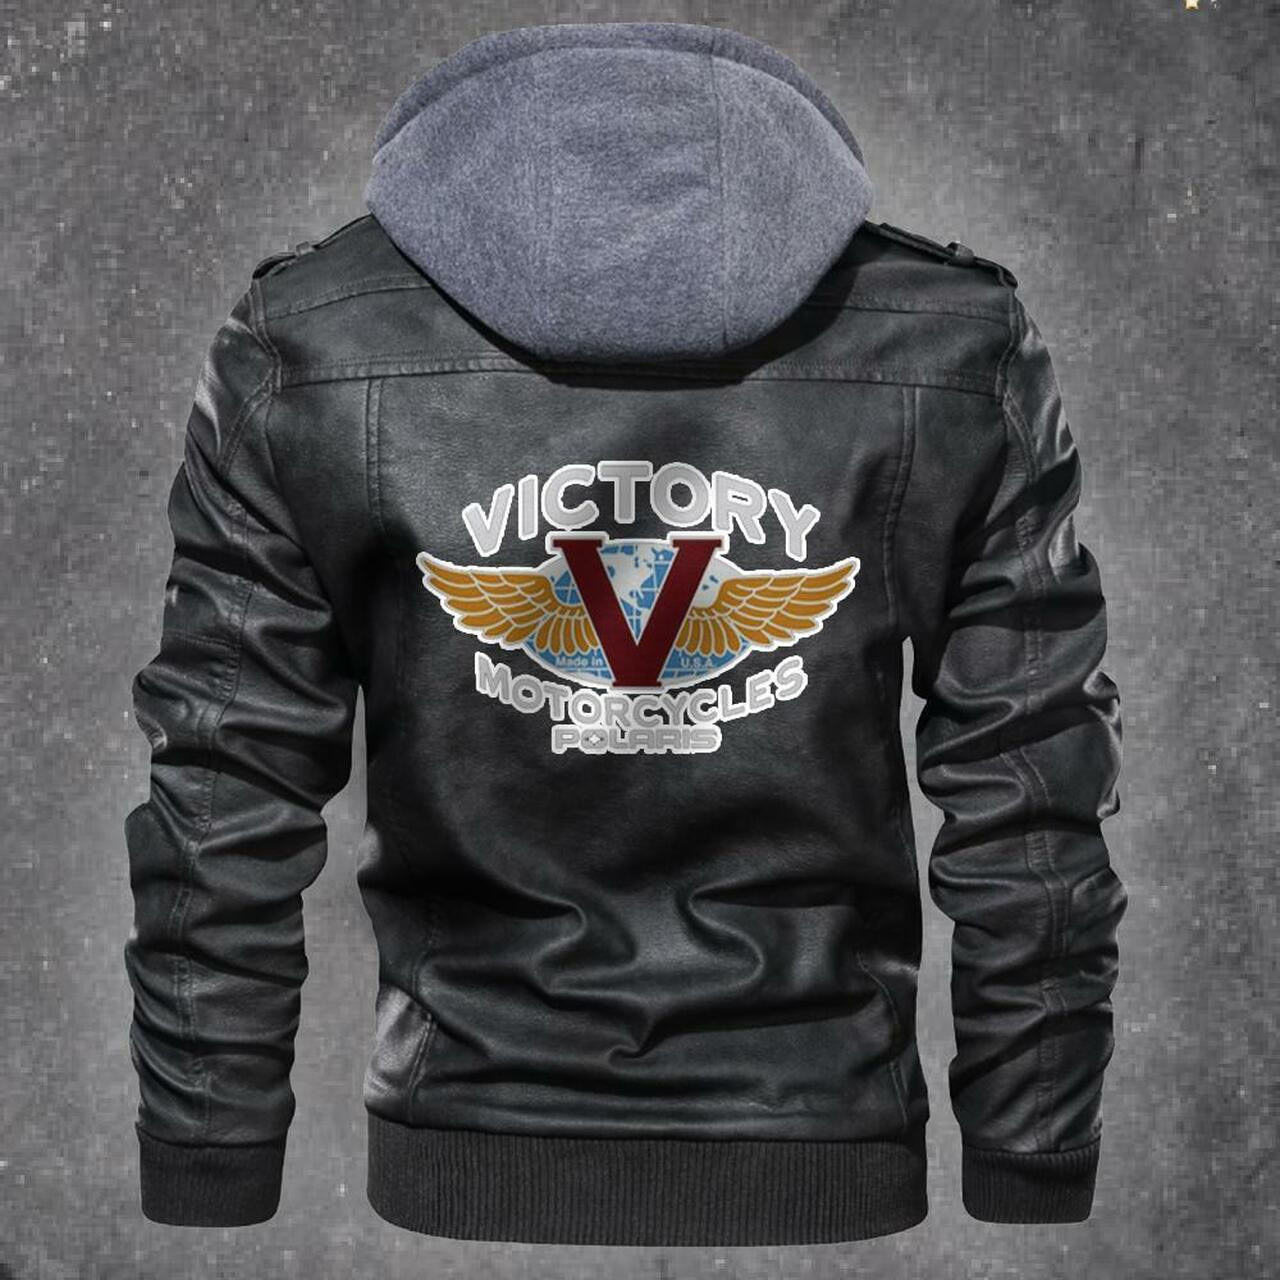 Top leather jacket Sells Best on Techcomshop 173